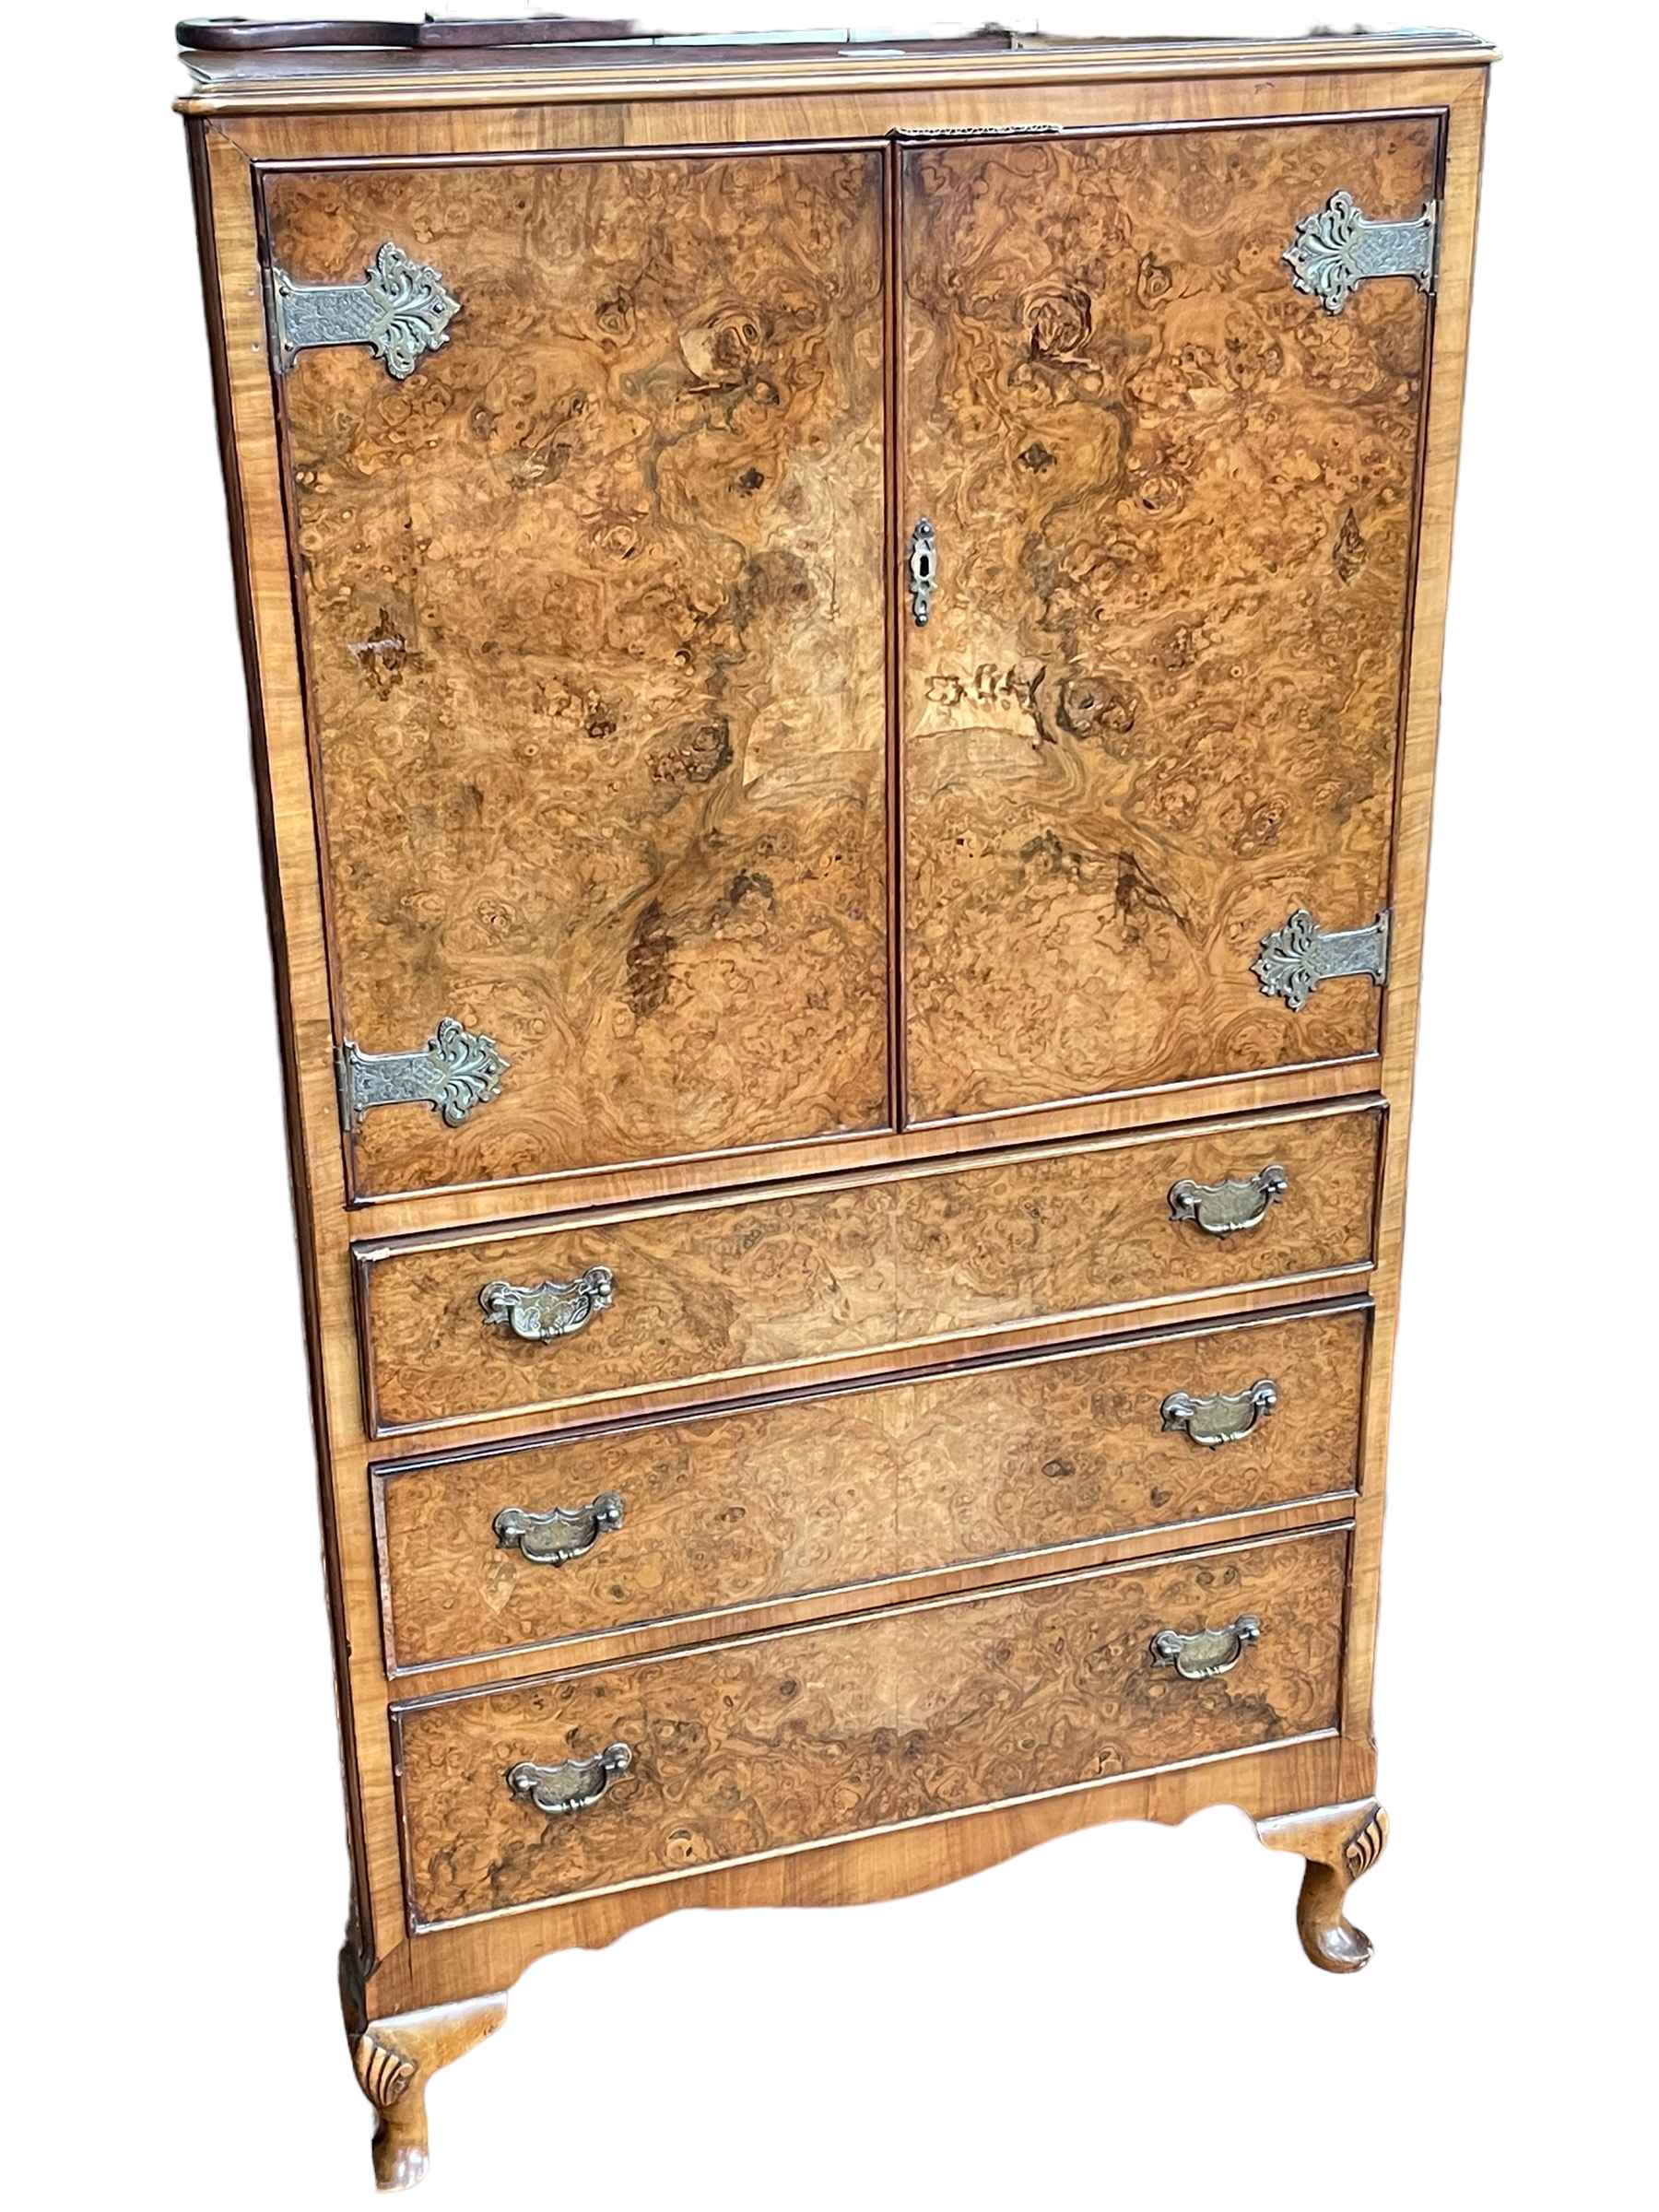 Burr walnut linen cupboard having two doors above three drawers on cabriole legs,